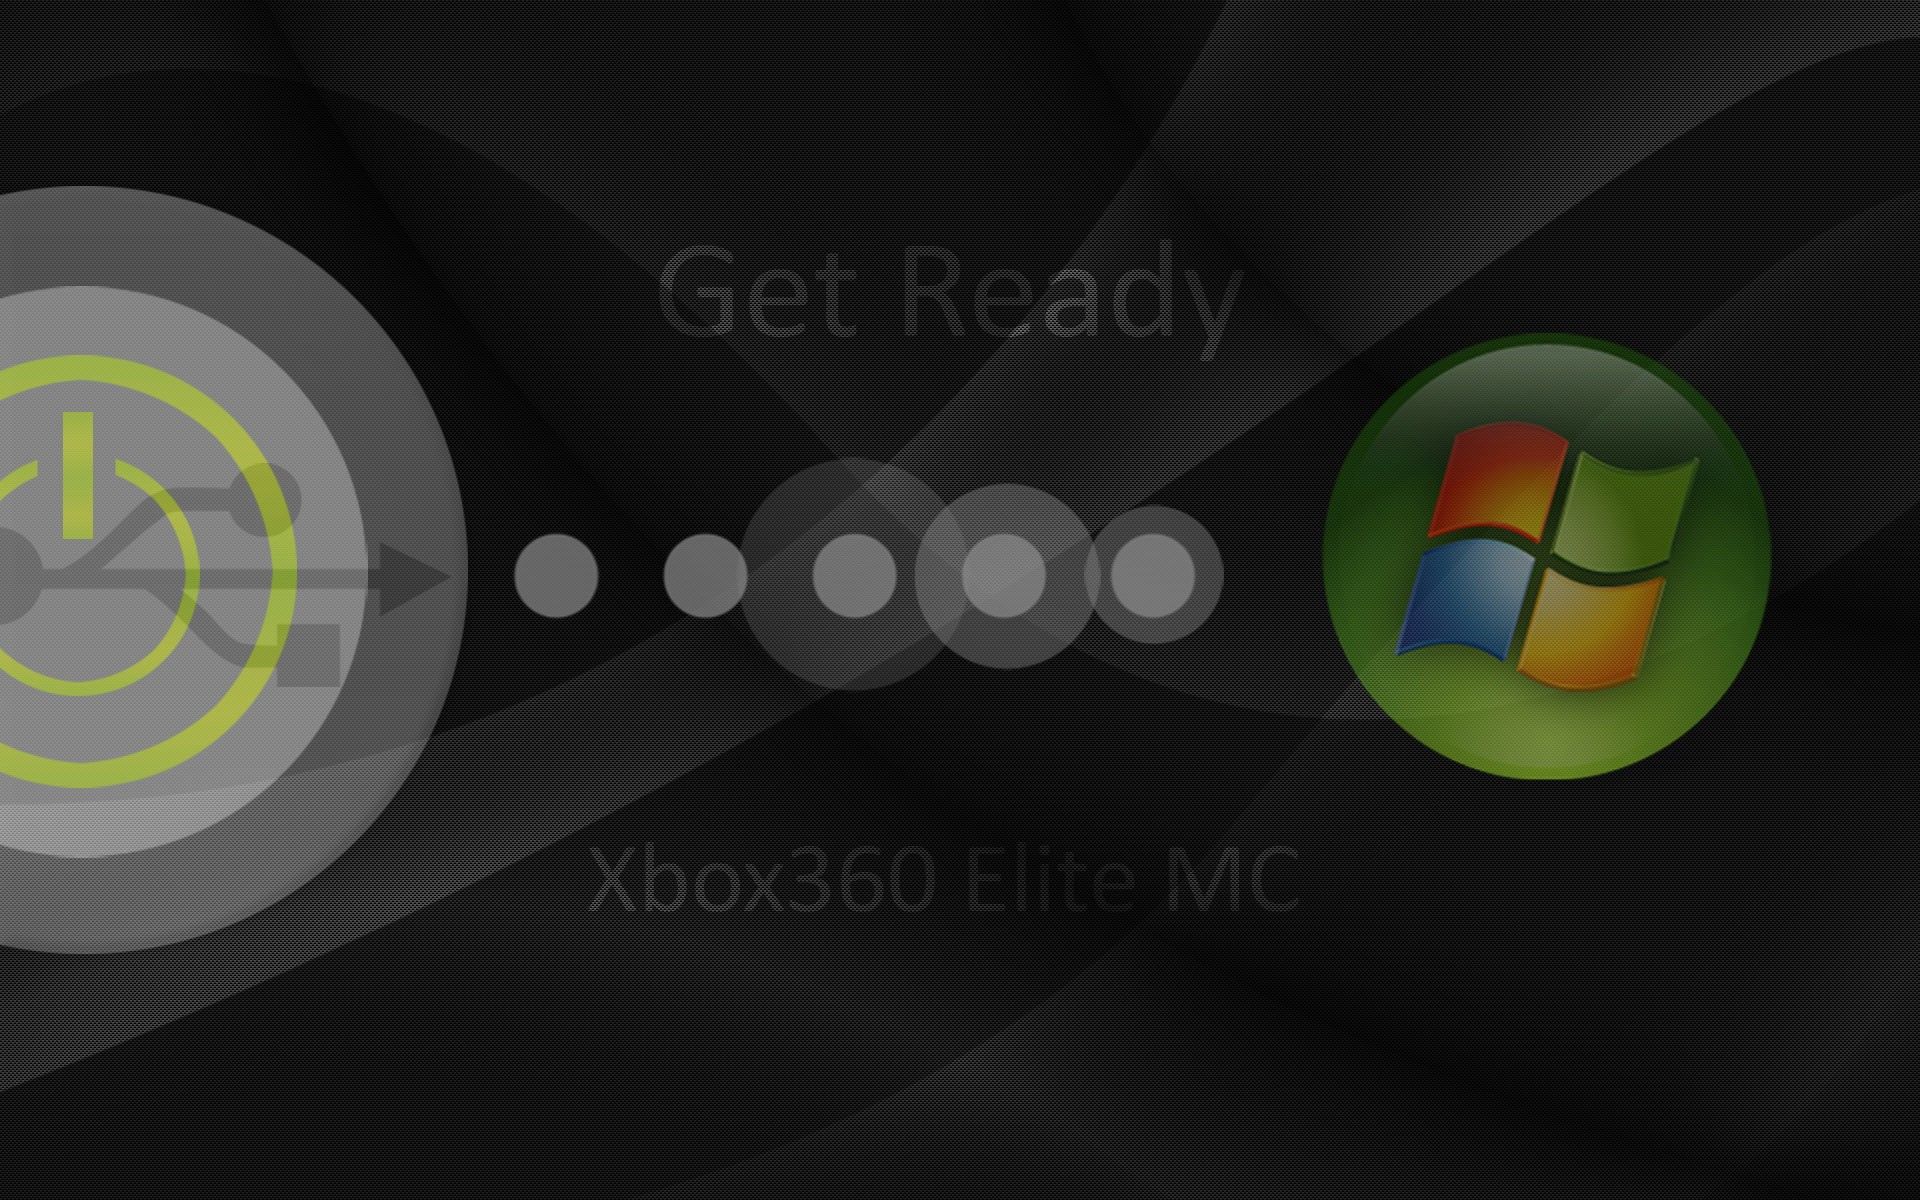 Xbox Desktop Wallpapers 4k Hd Xbox Desktop Backgrounds On Wallpaperbat 5368